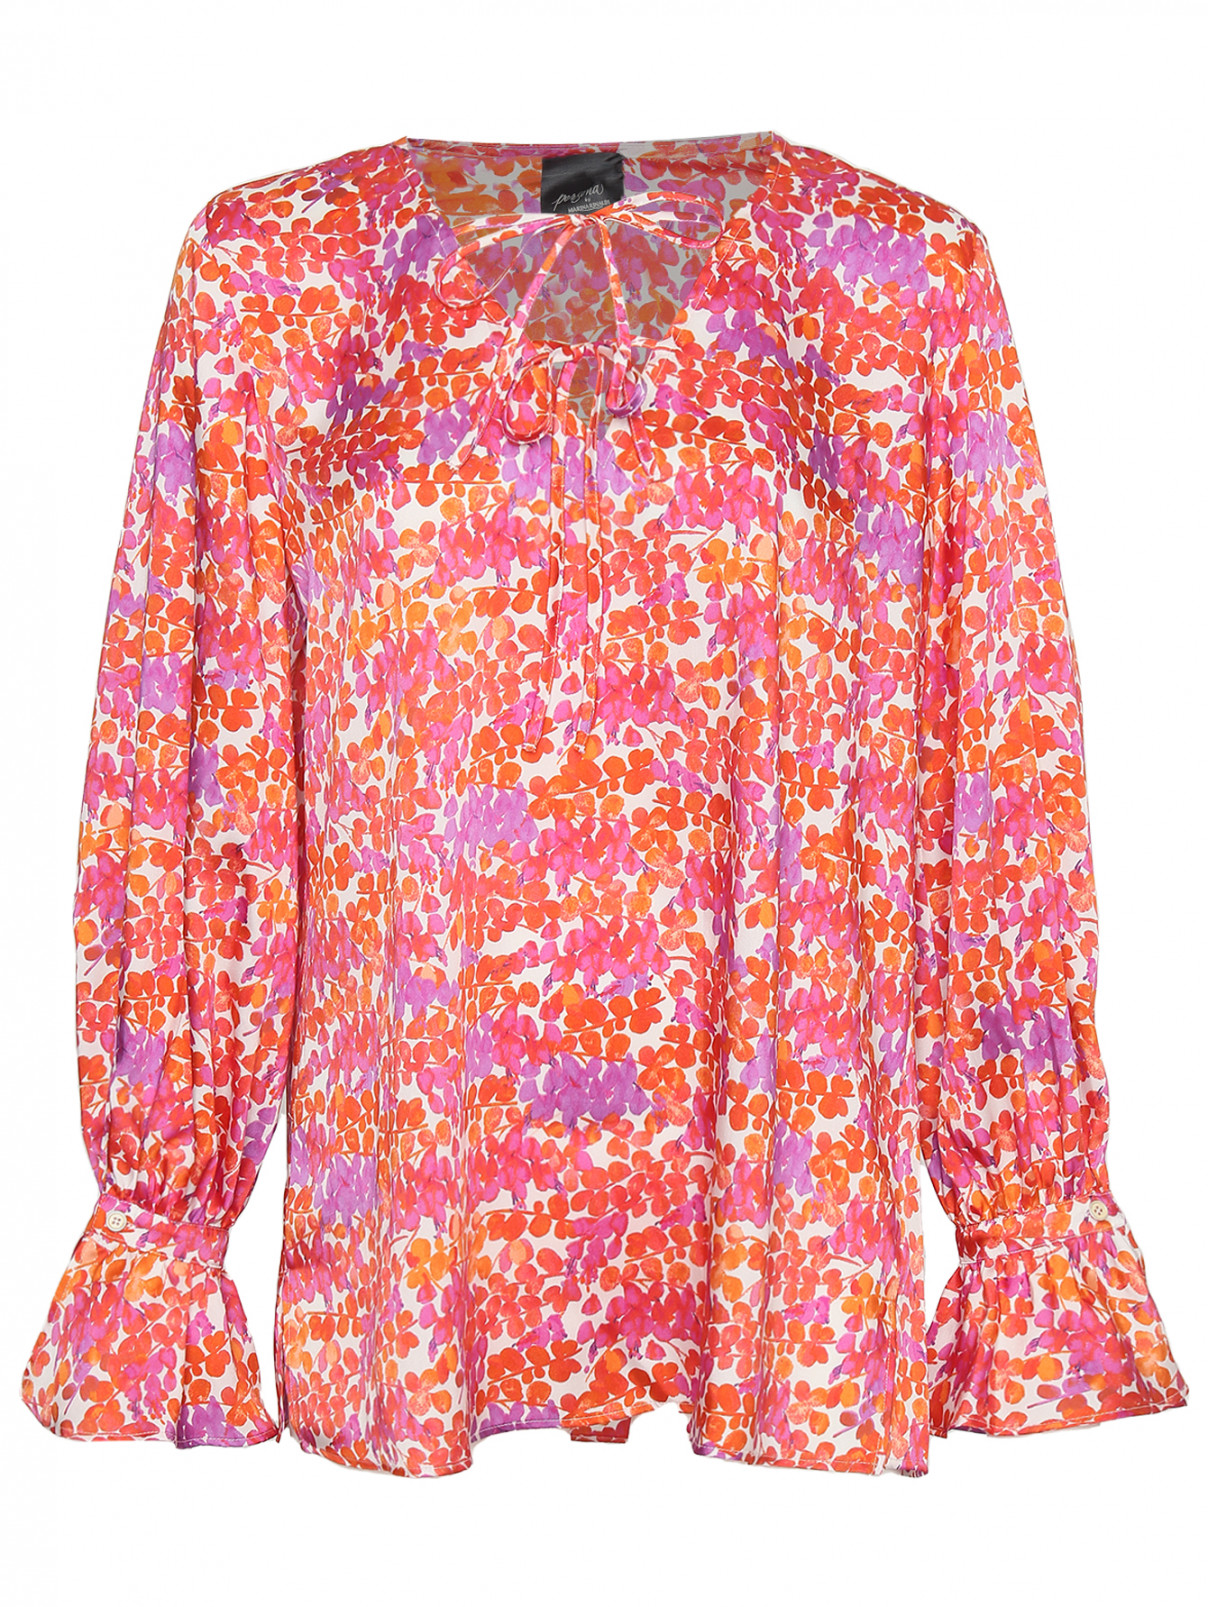 Блуза свободного кроя с узором Persona by Marina Rinaldi  –  Общий вид  – Цвет:  Узор